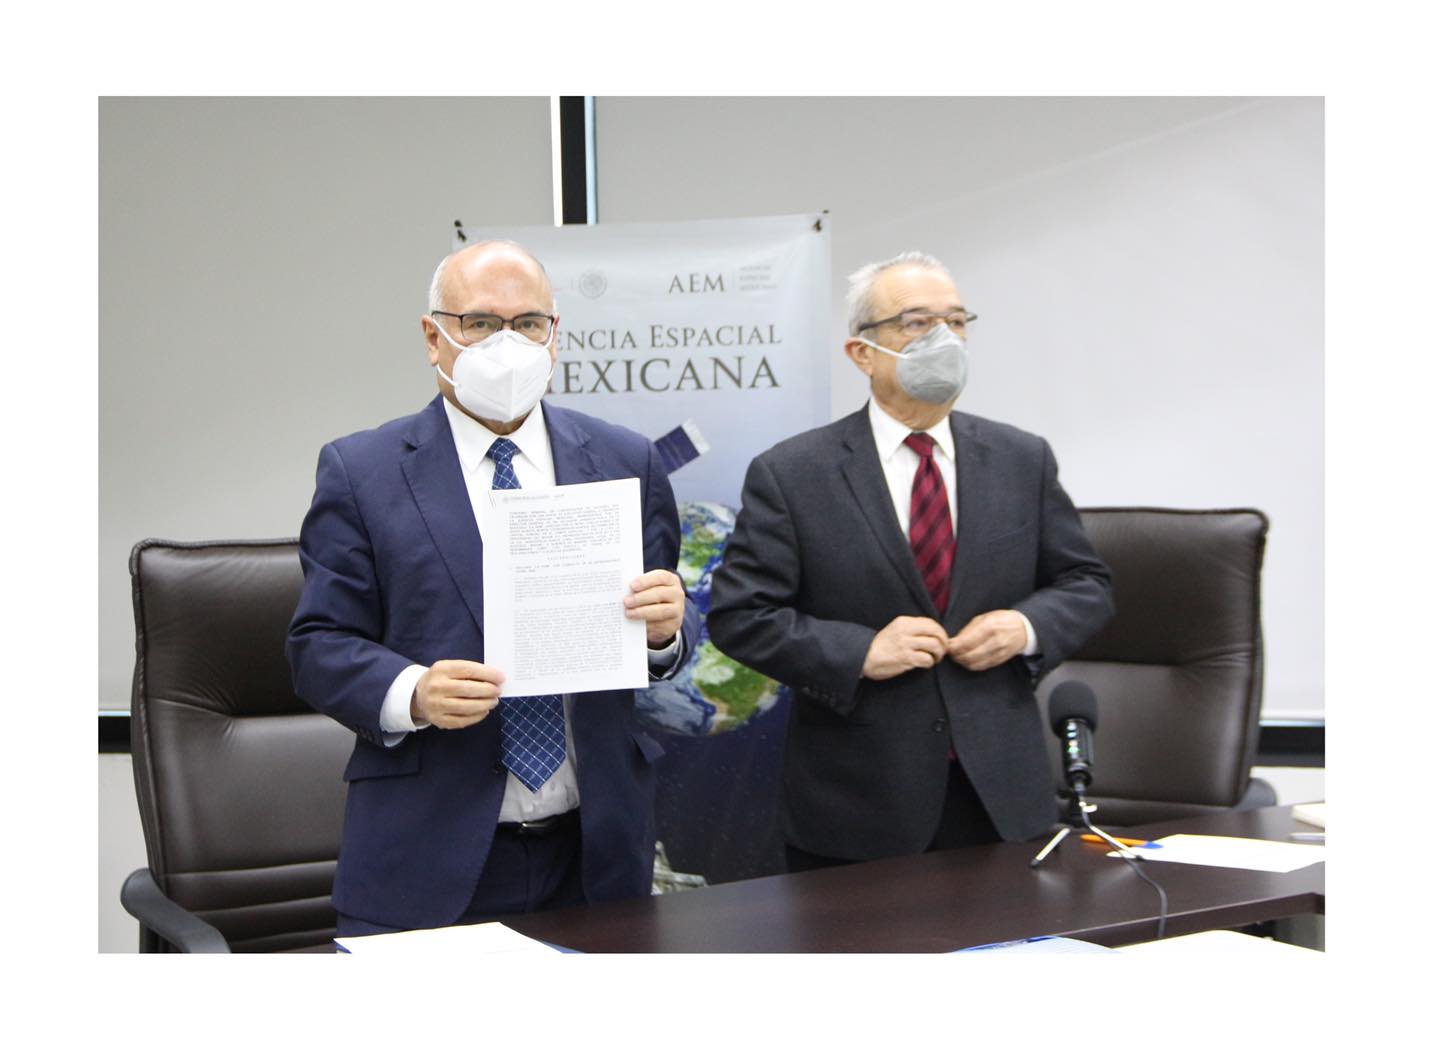 AEM to promote aerospace development in Southeast Mexico